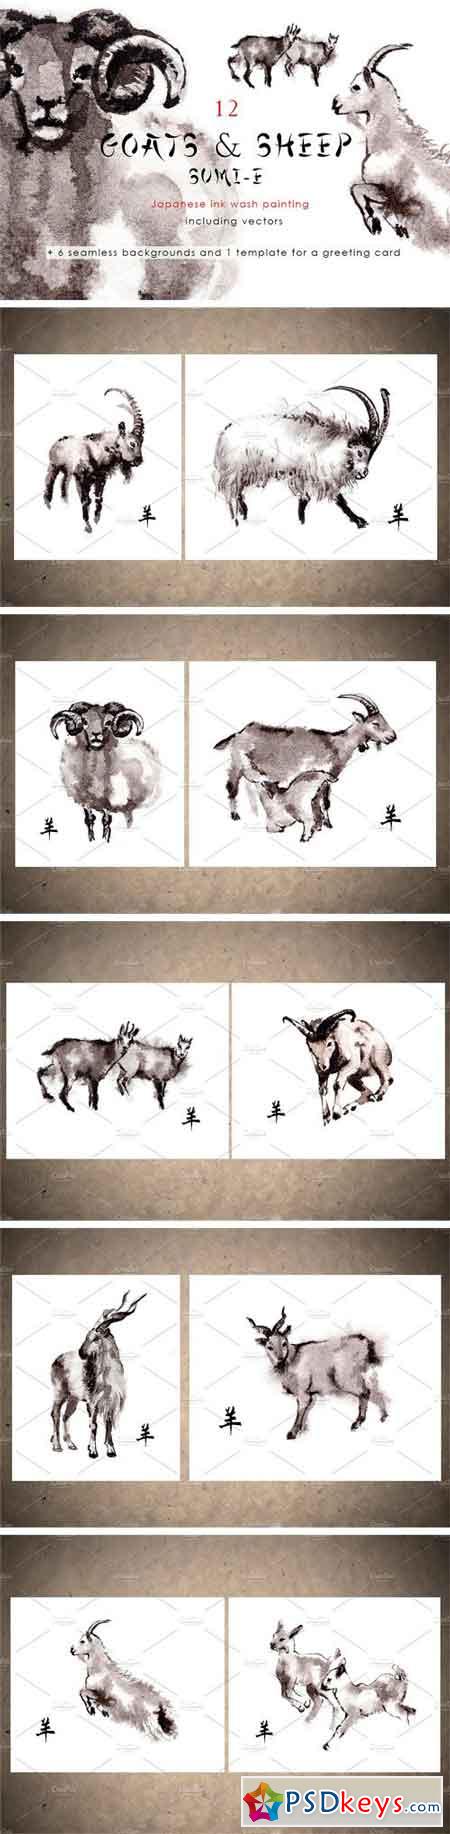 Goats and Sheep Sumi-e 1480609